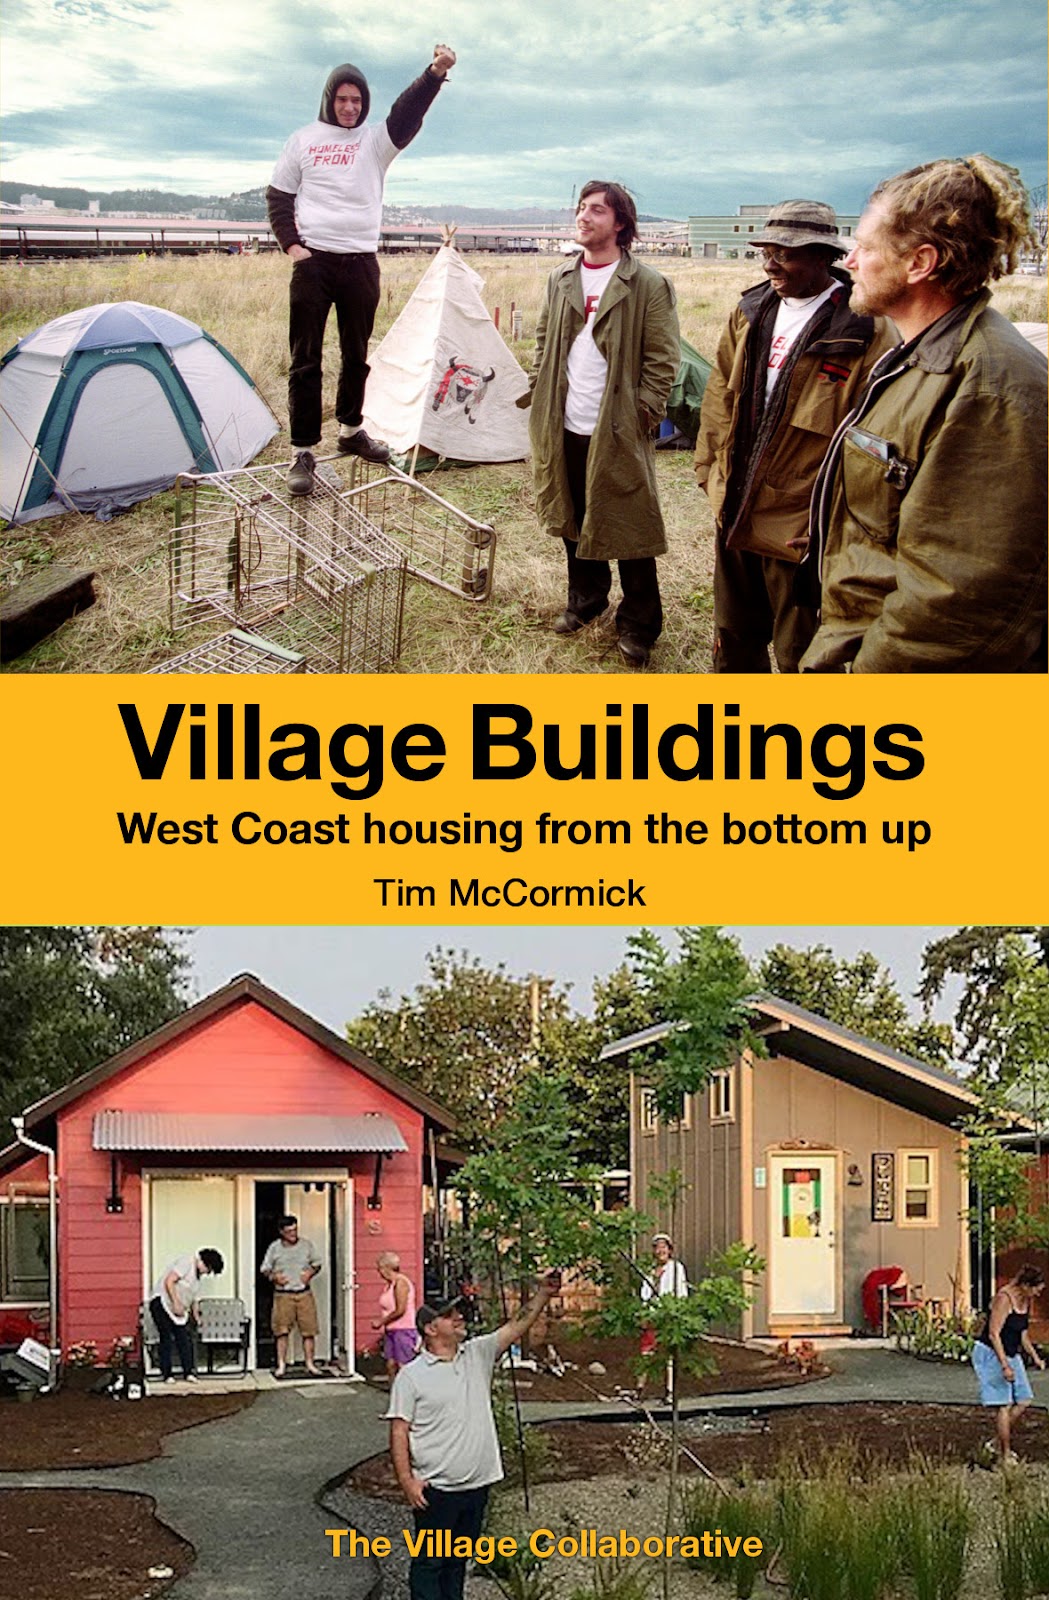 Village Building book cover mockup 3